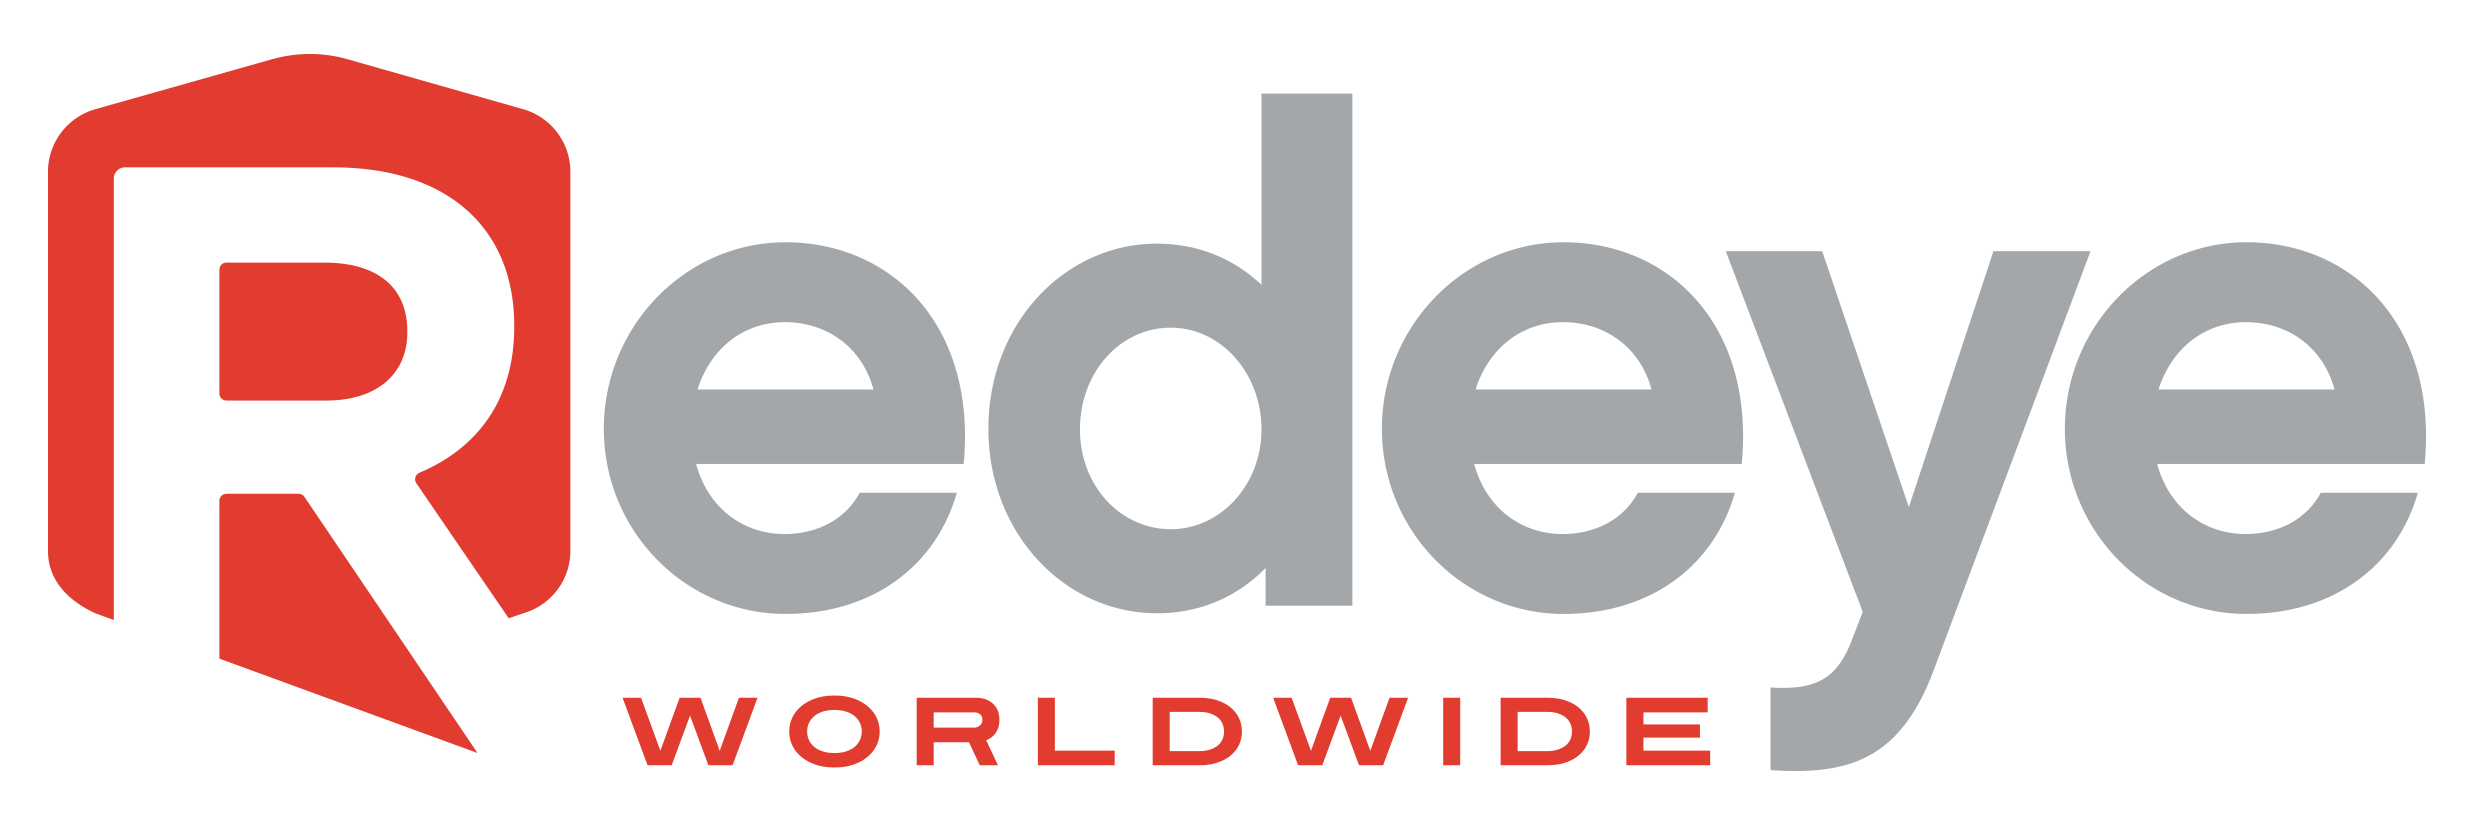 Redeye Moving Global Headquarters to Hillsborough